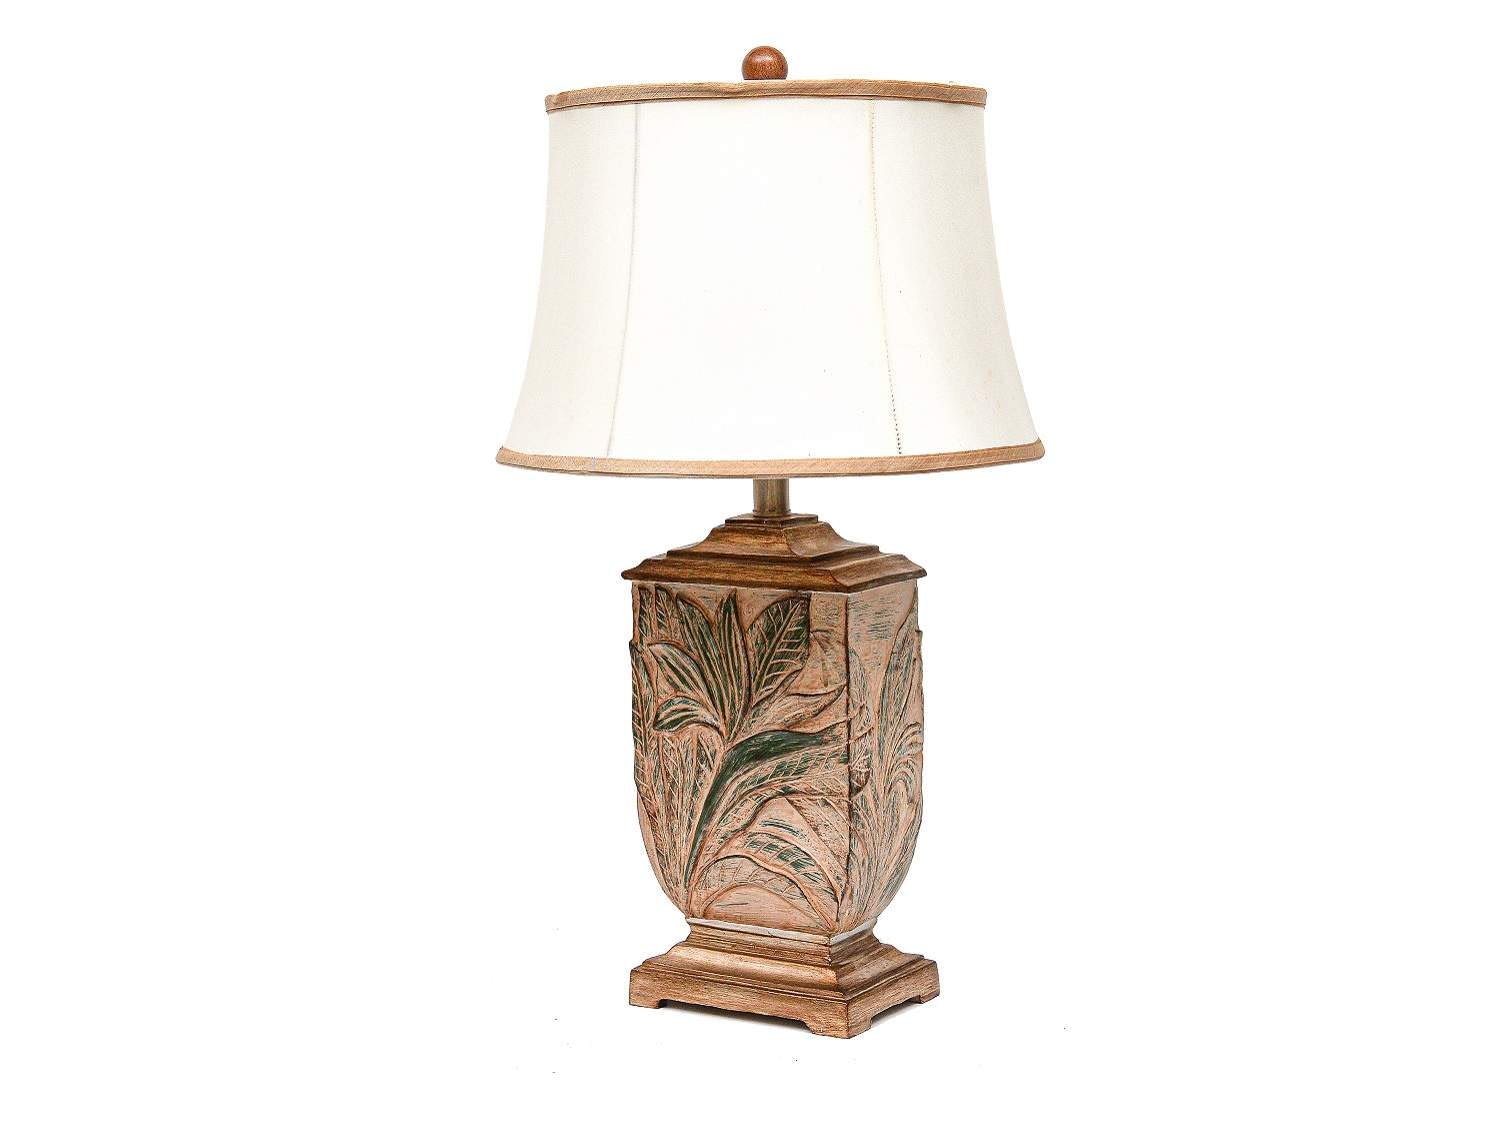 Halston Table Lamp - Side